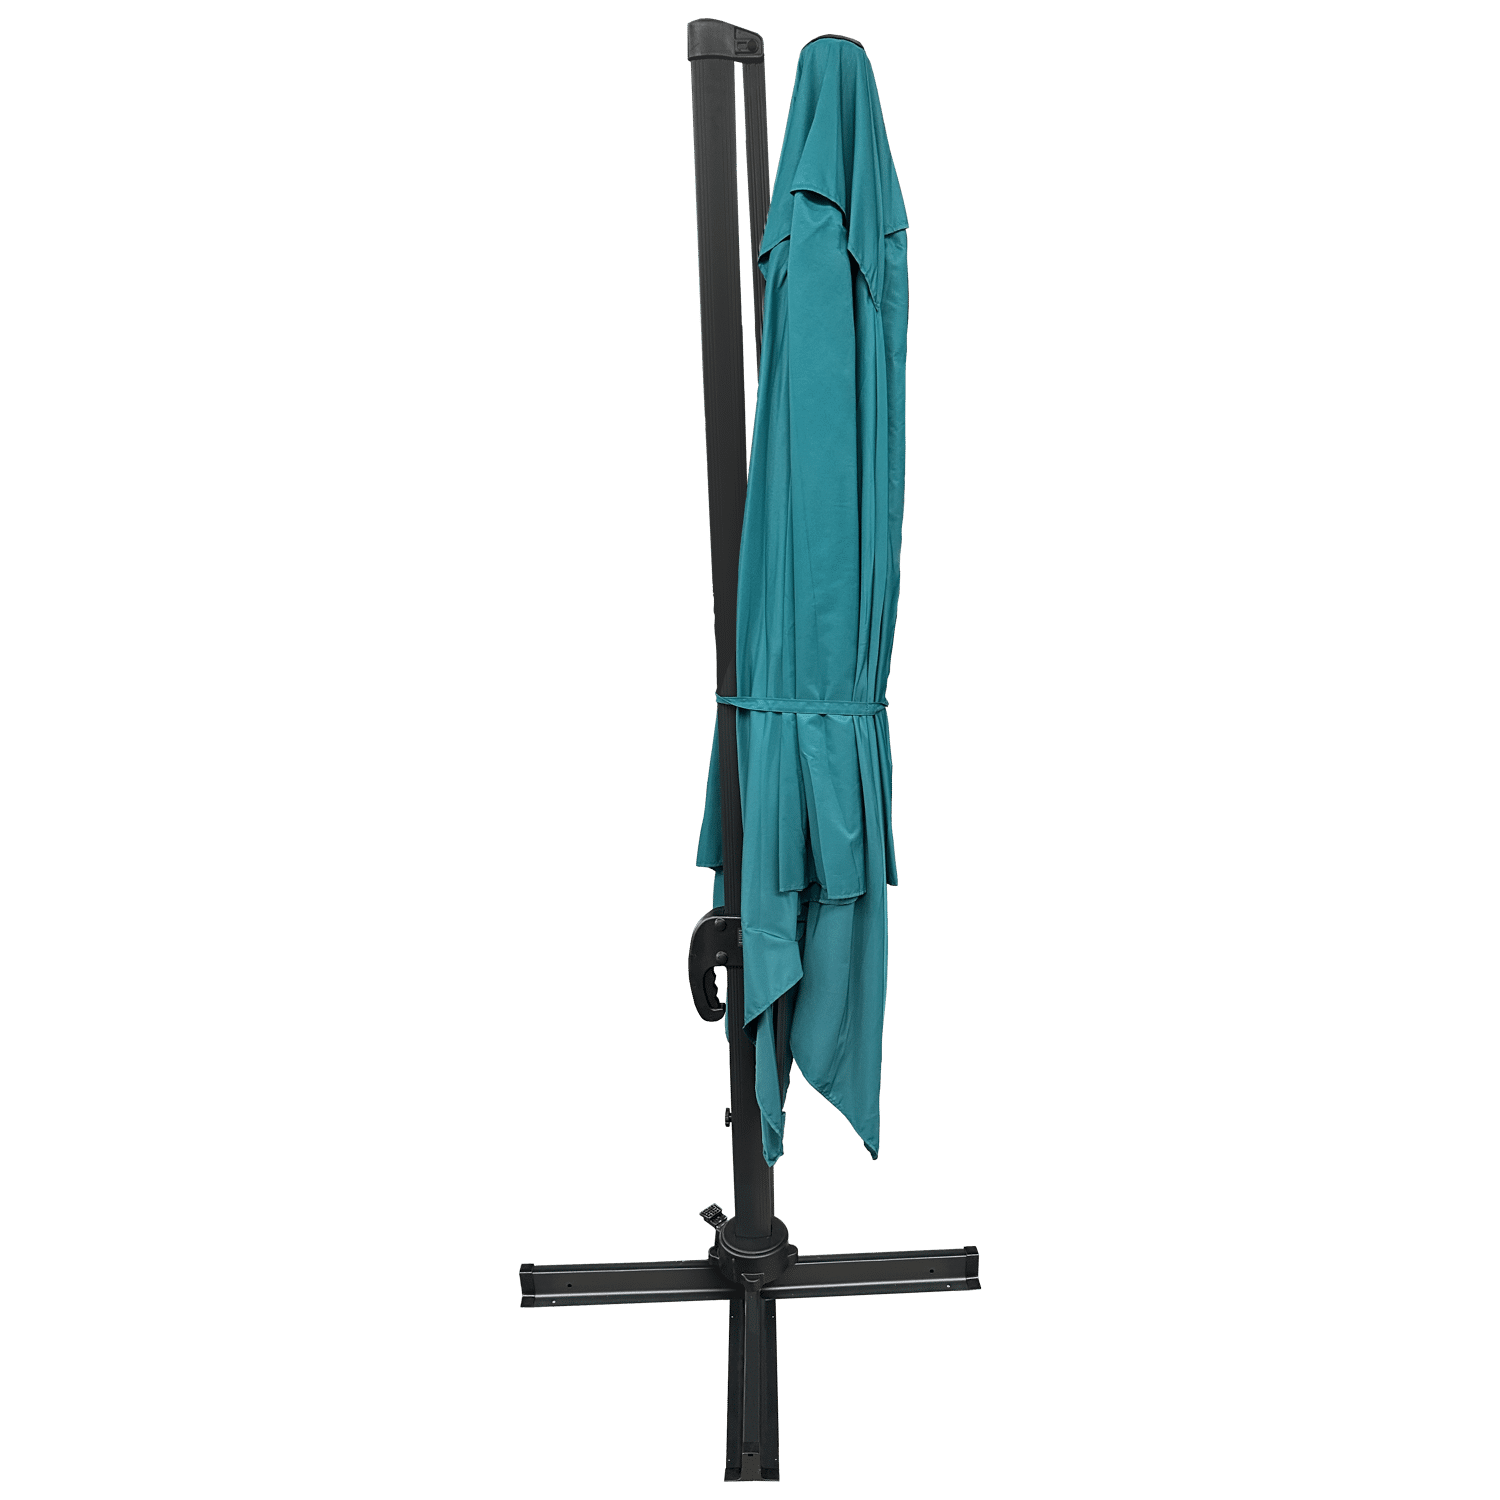 Offset paraplu MOLOKAI vierkant 3x3m blauw + hoes